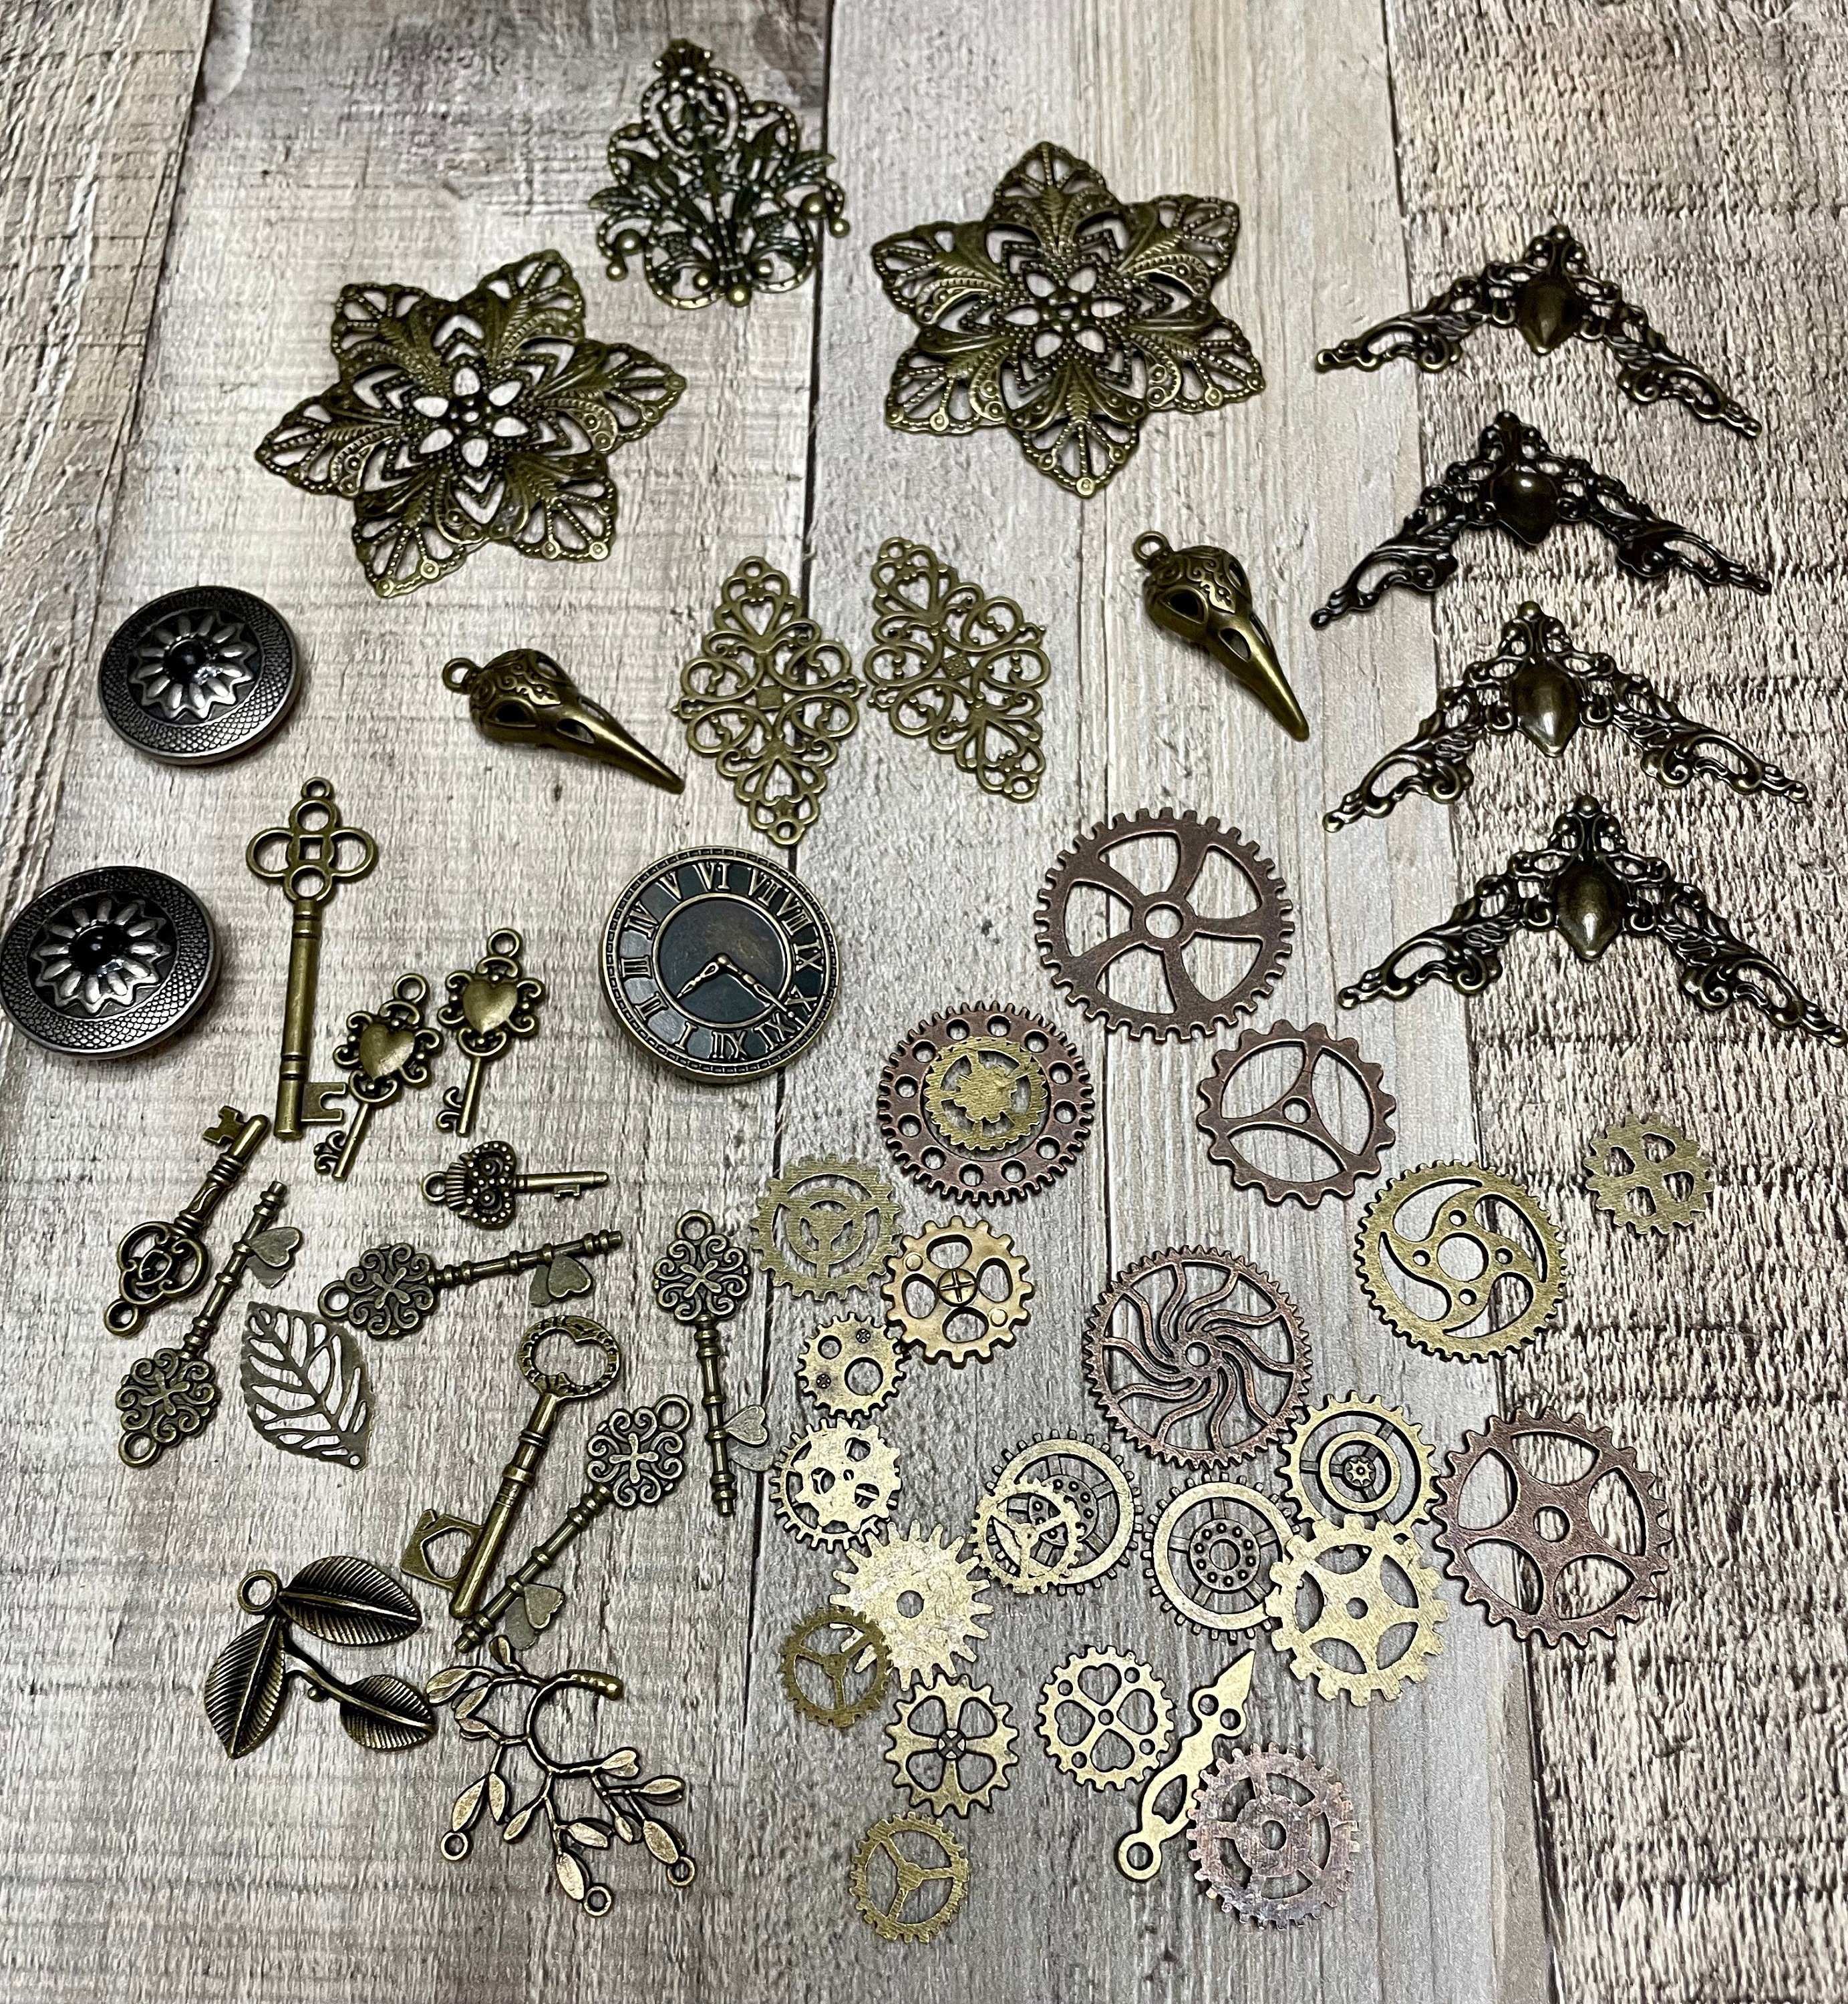 10pcs Miniature Metal Crafting Embellishments